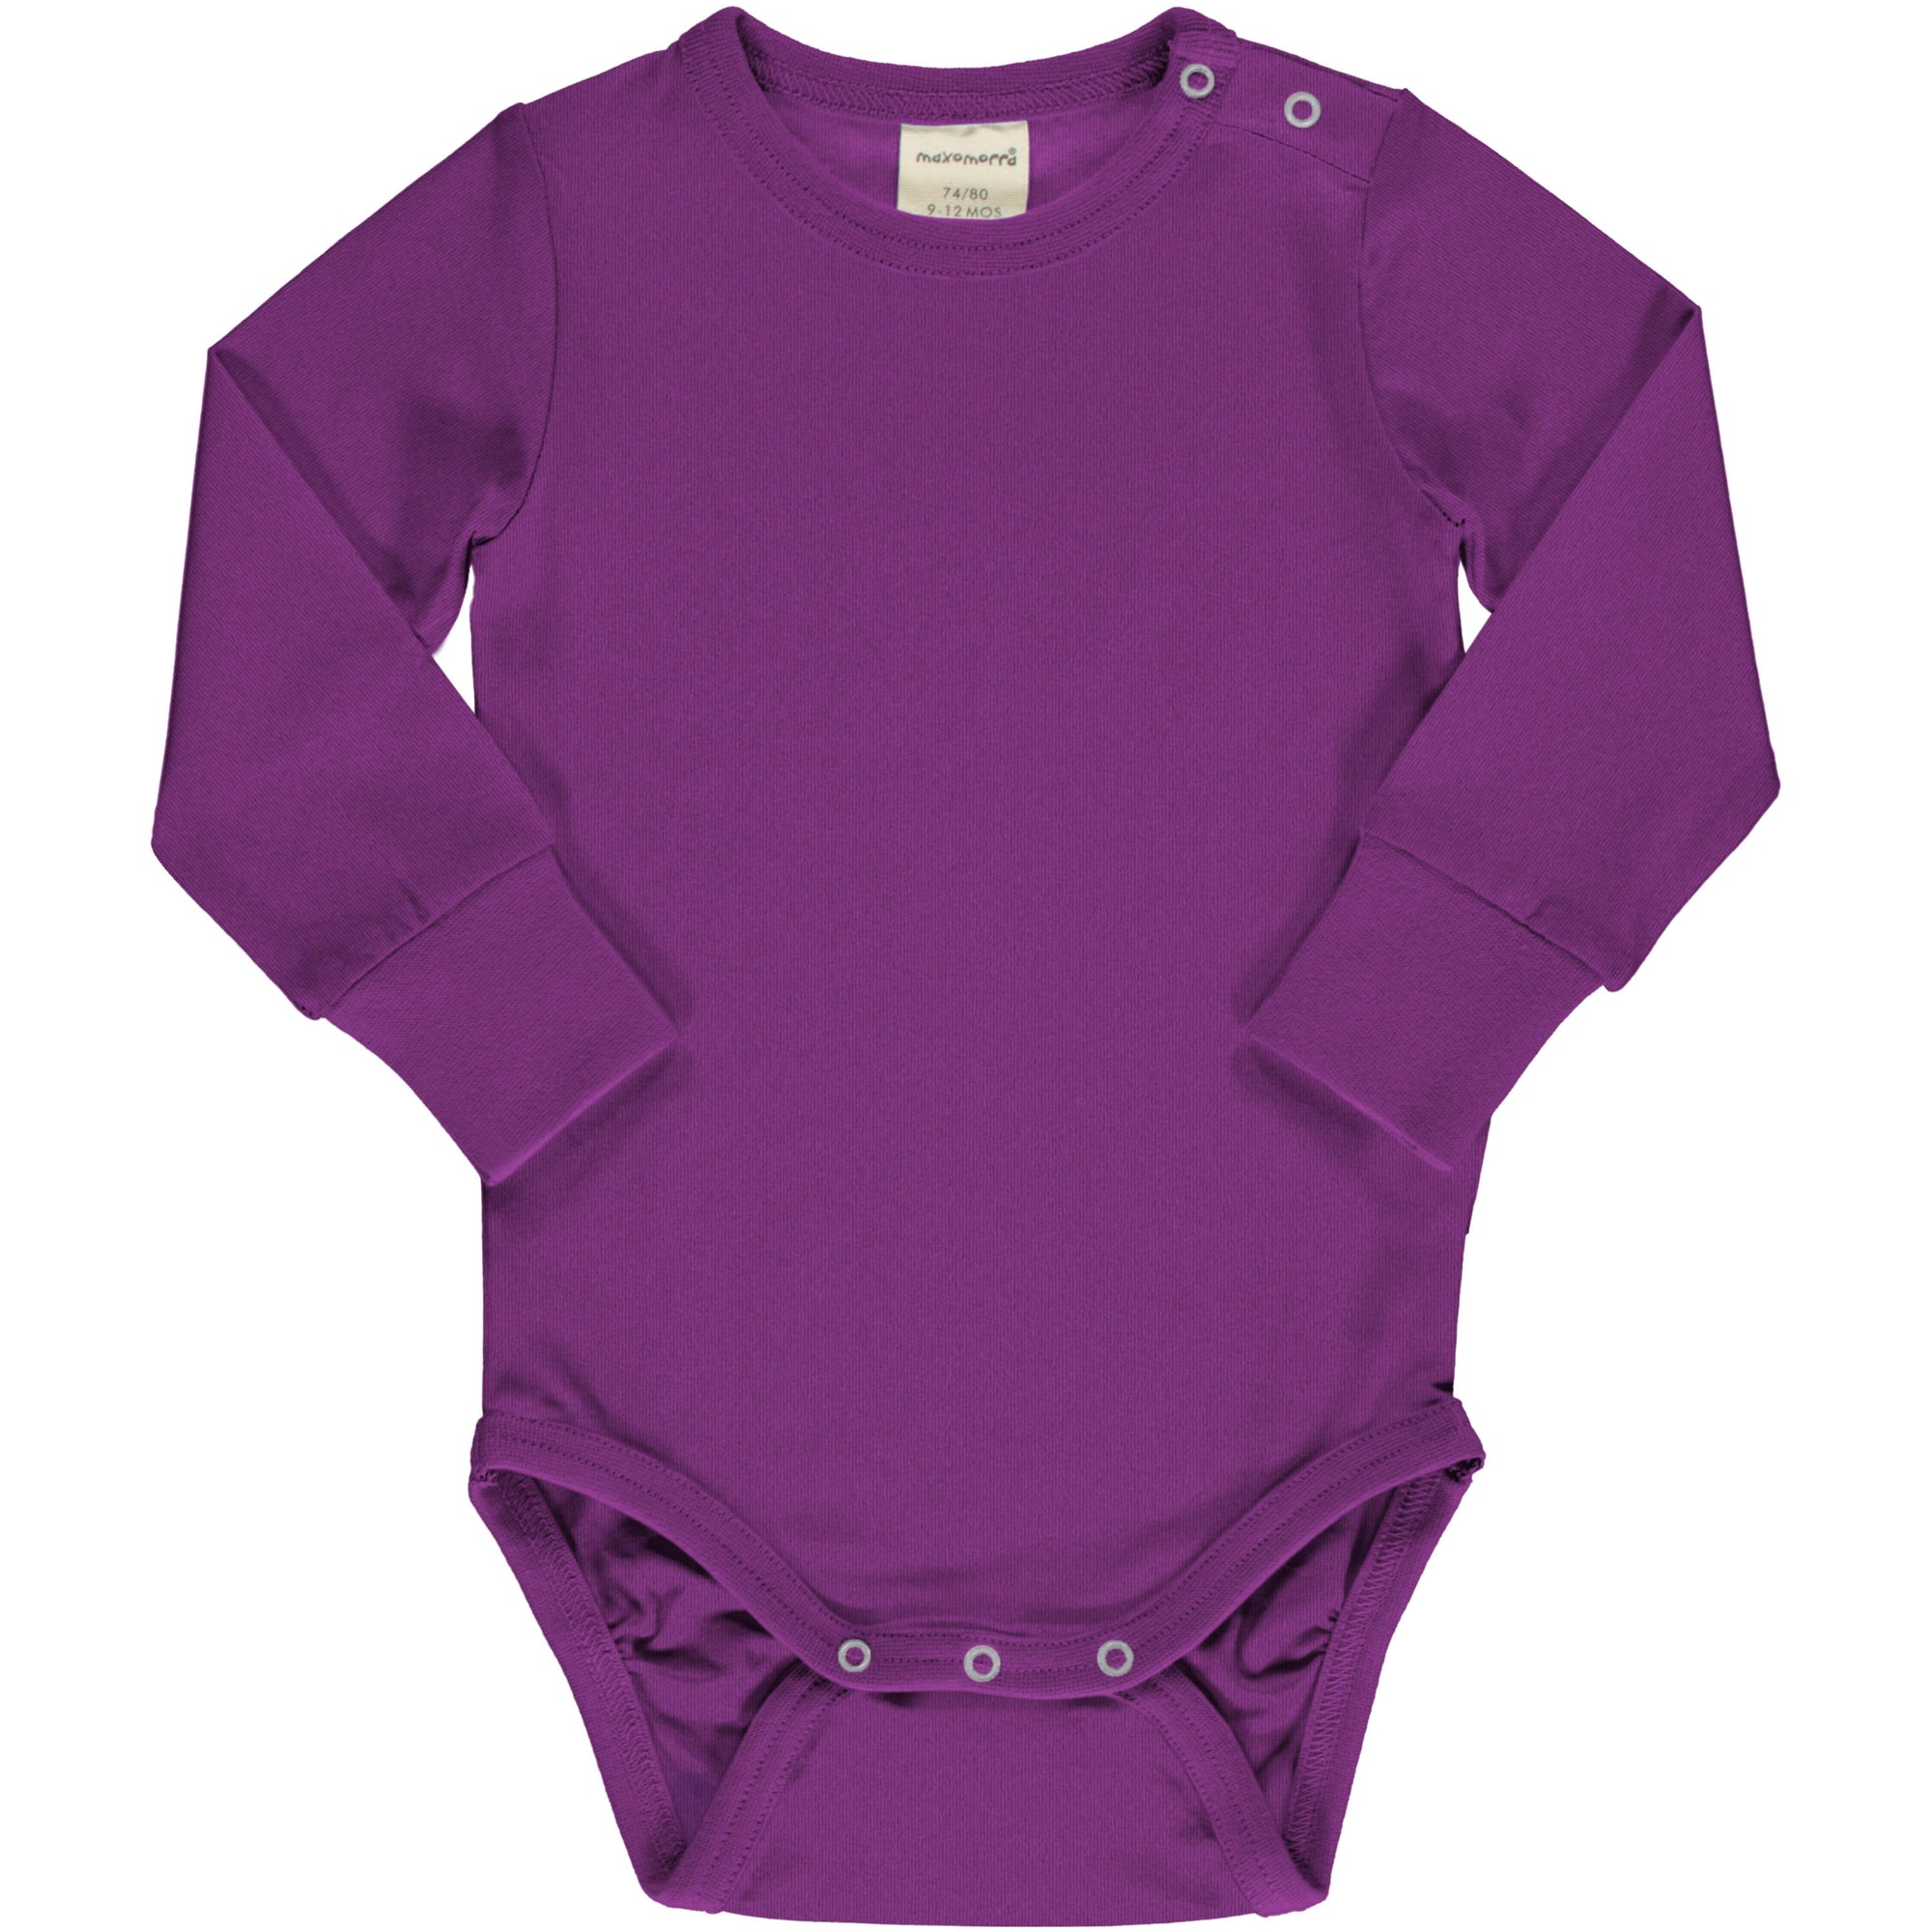 Maxomorra Plain Violet Bodysuit Sxbas01 Clothing 0-3M / Violet,3-6M / Violet,9-12M / Violet,18-24M / Violet